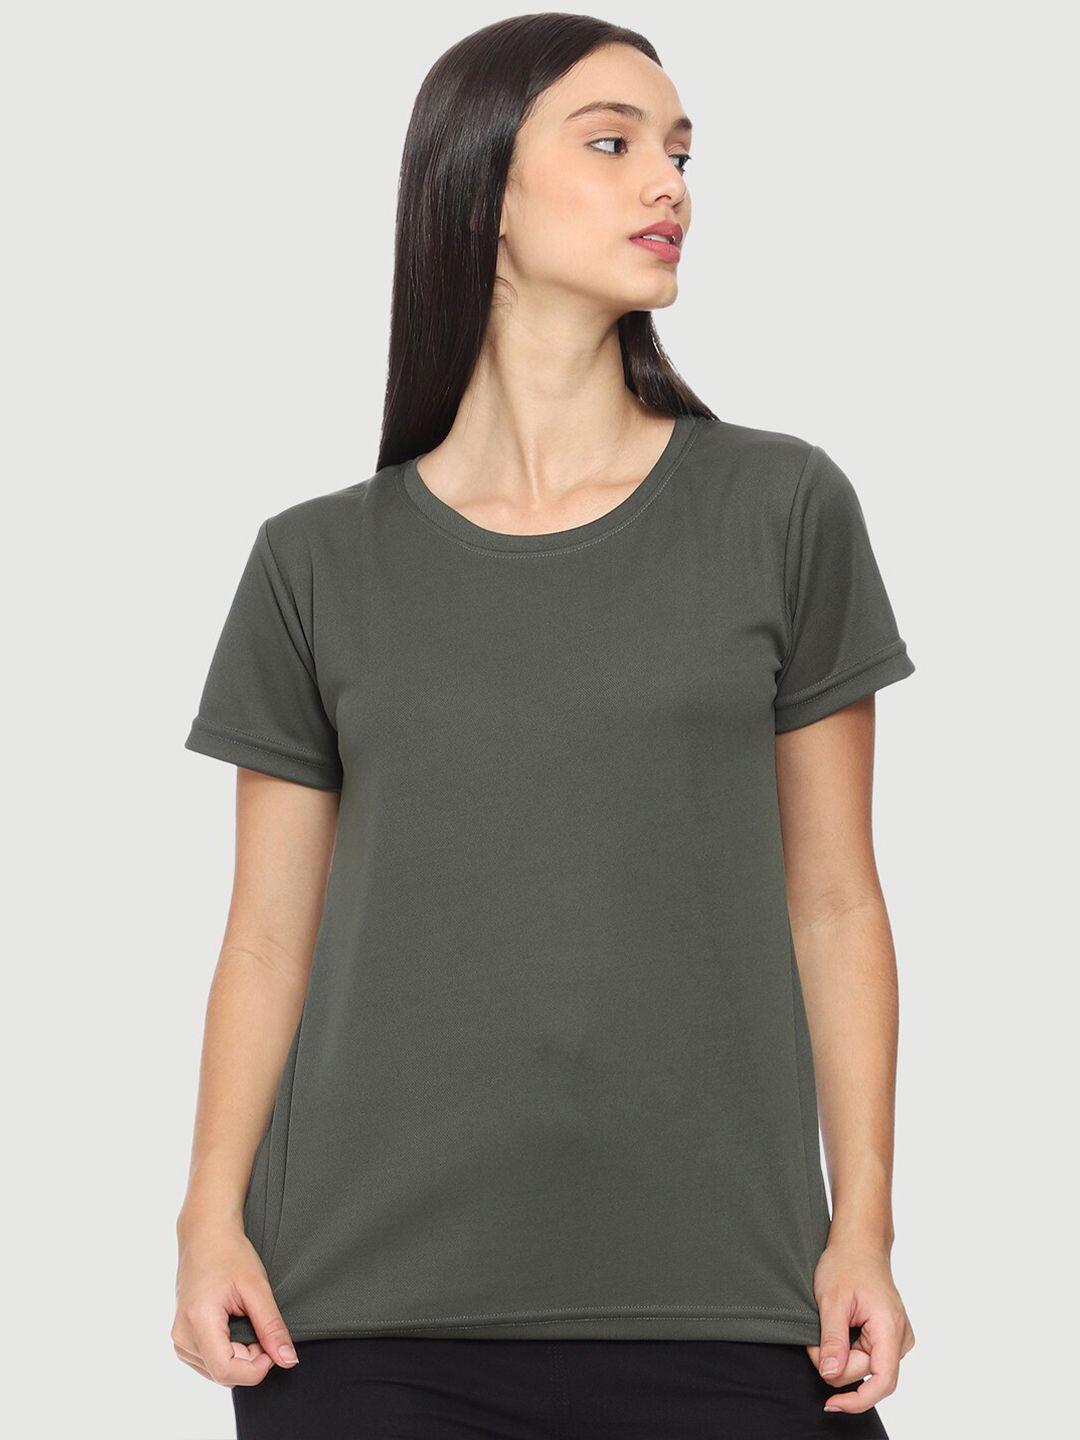 urban komfort women round neck t-shirt